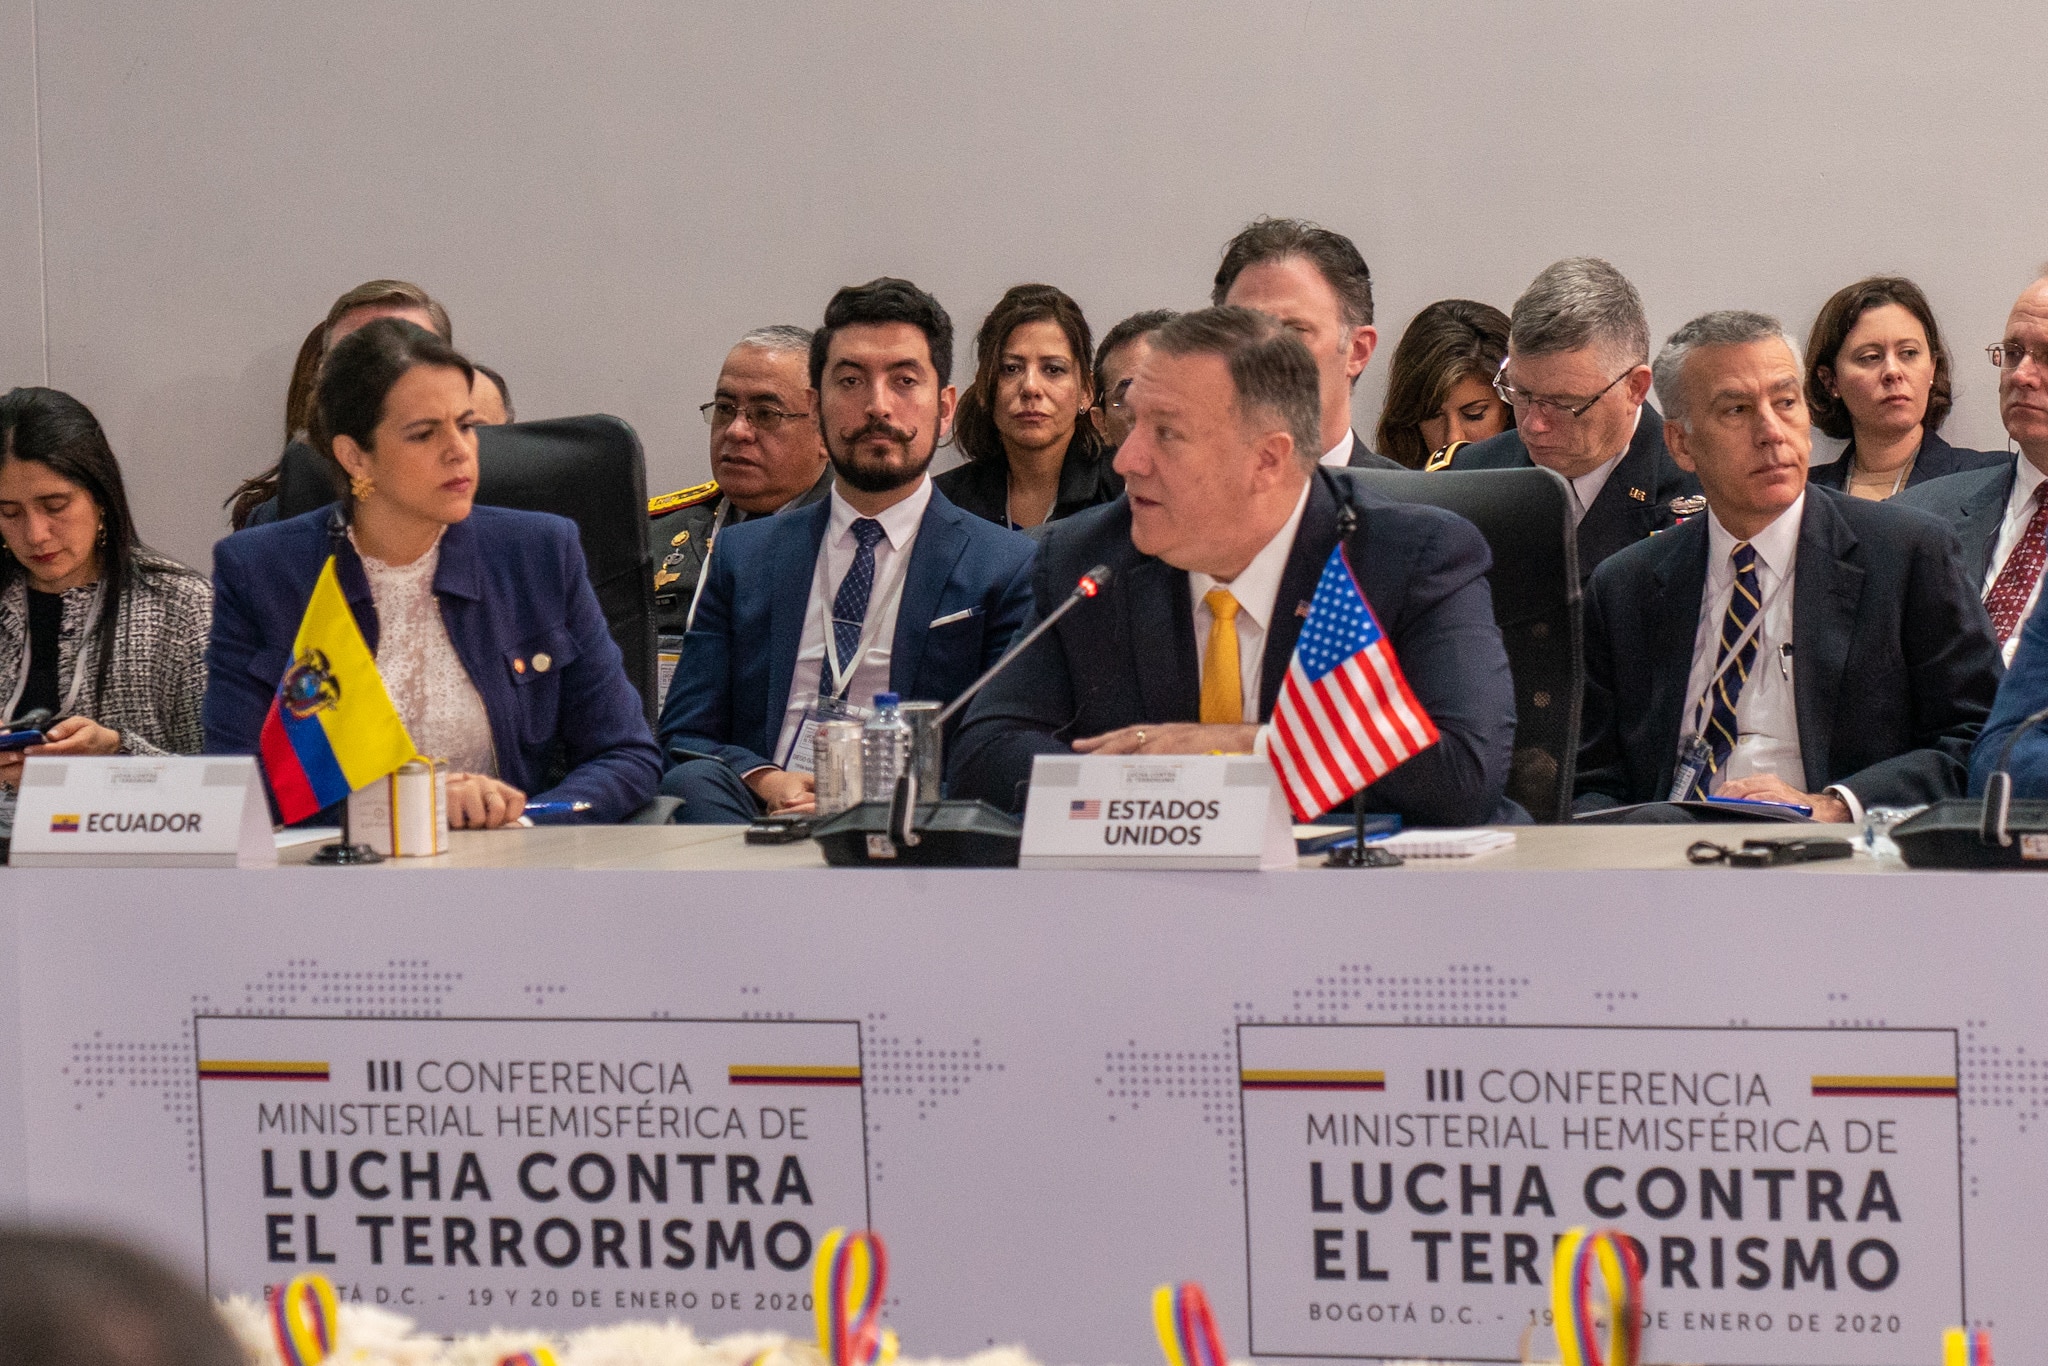 Third Western Hemisphere Counterterrorism Ministerial in Bogota, Colombia.